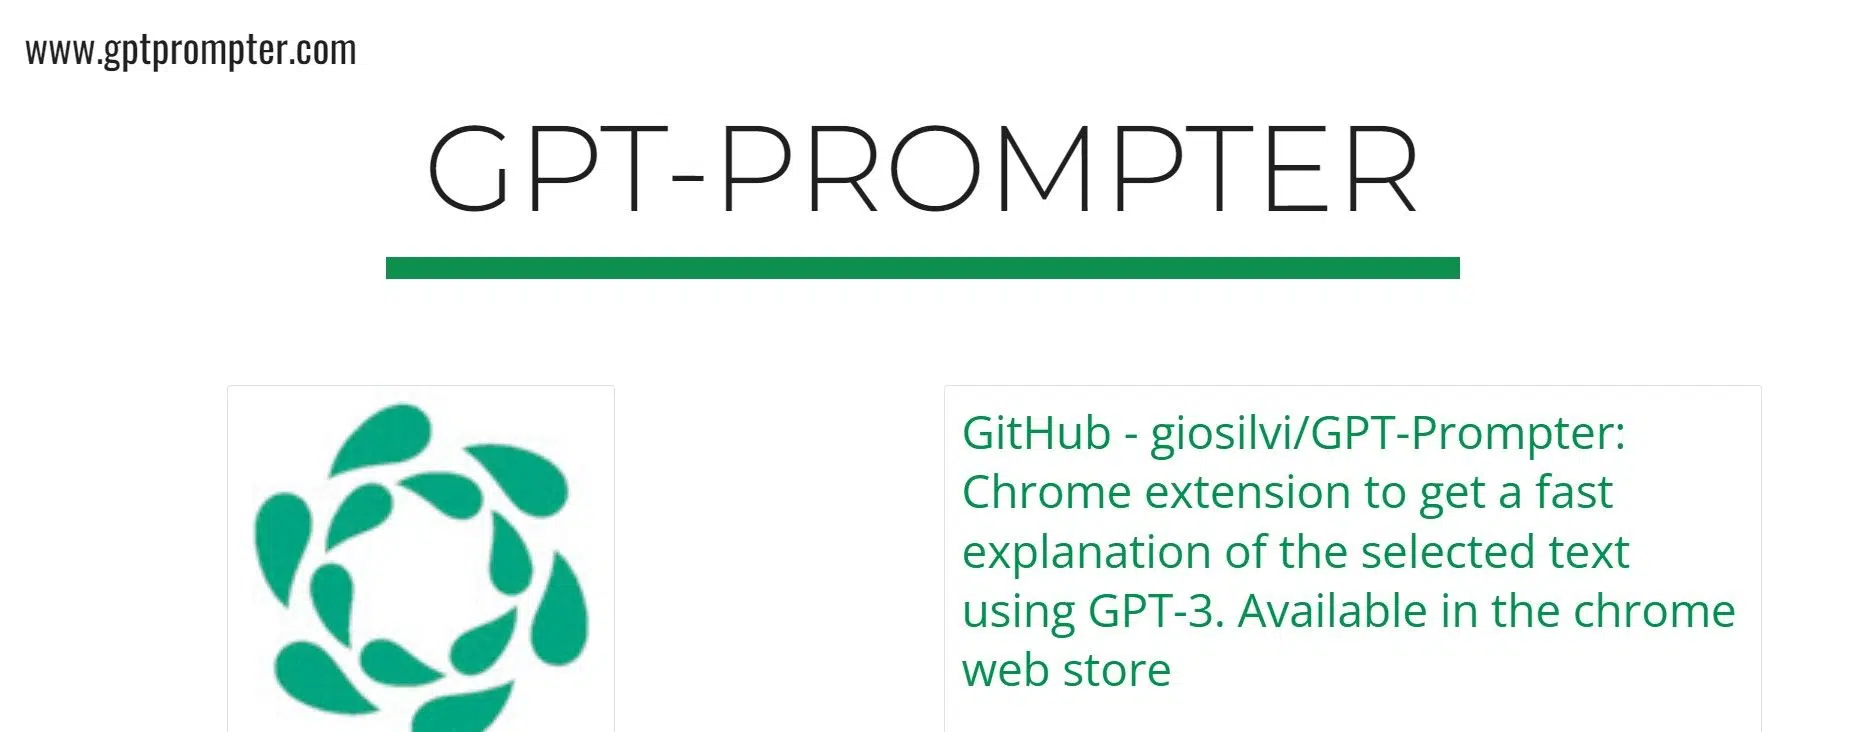 GPT-Prompterwebsite picture